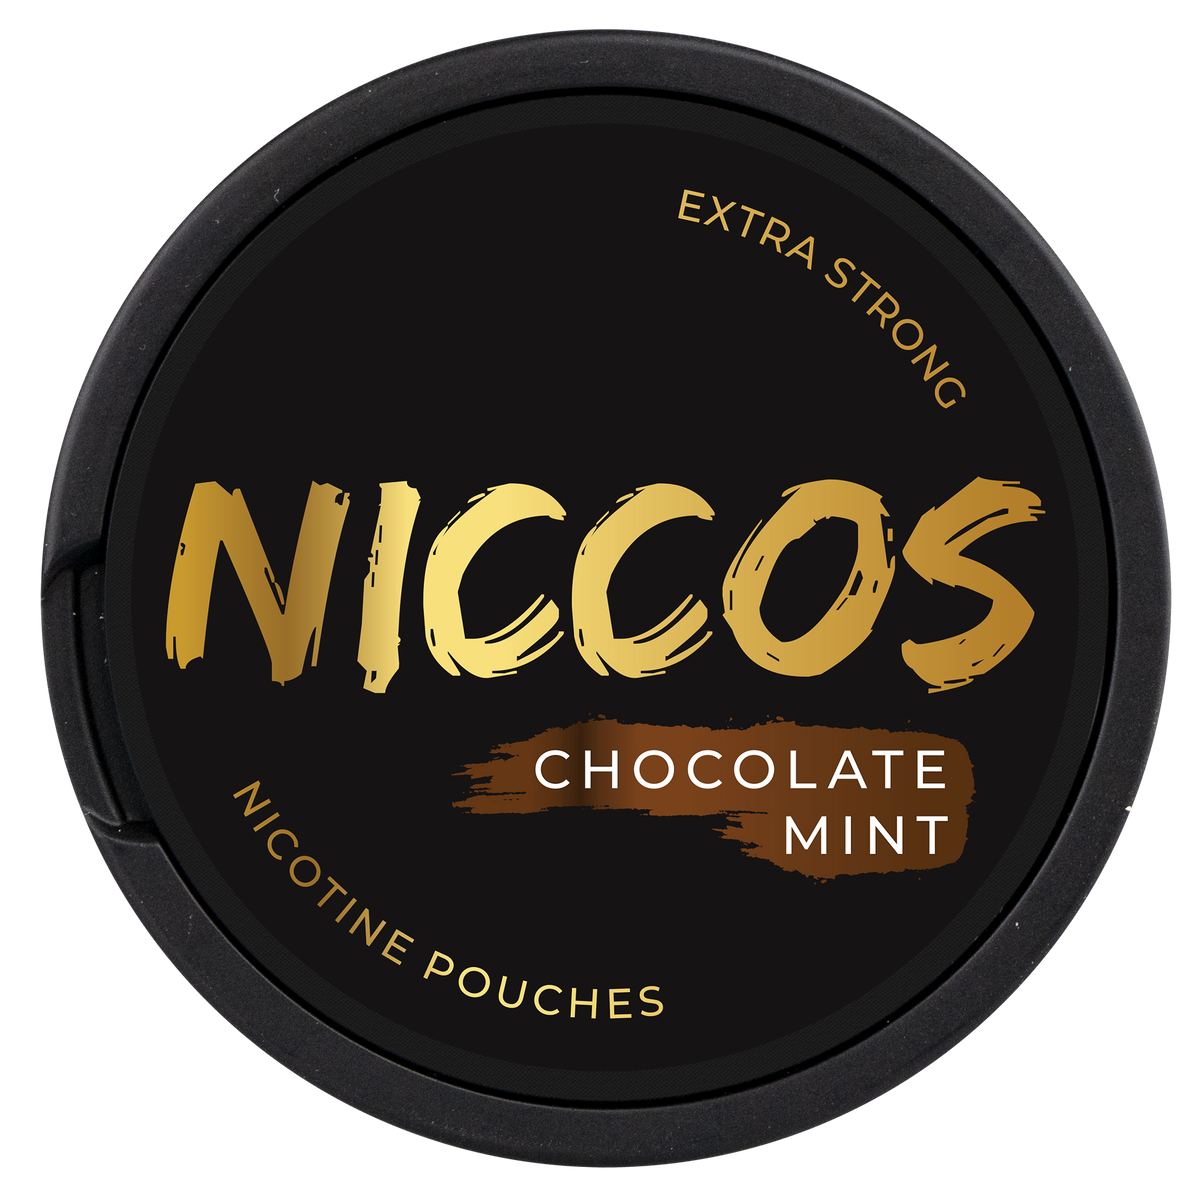 NICCOS Chocolate Mint